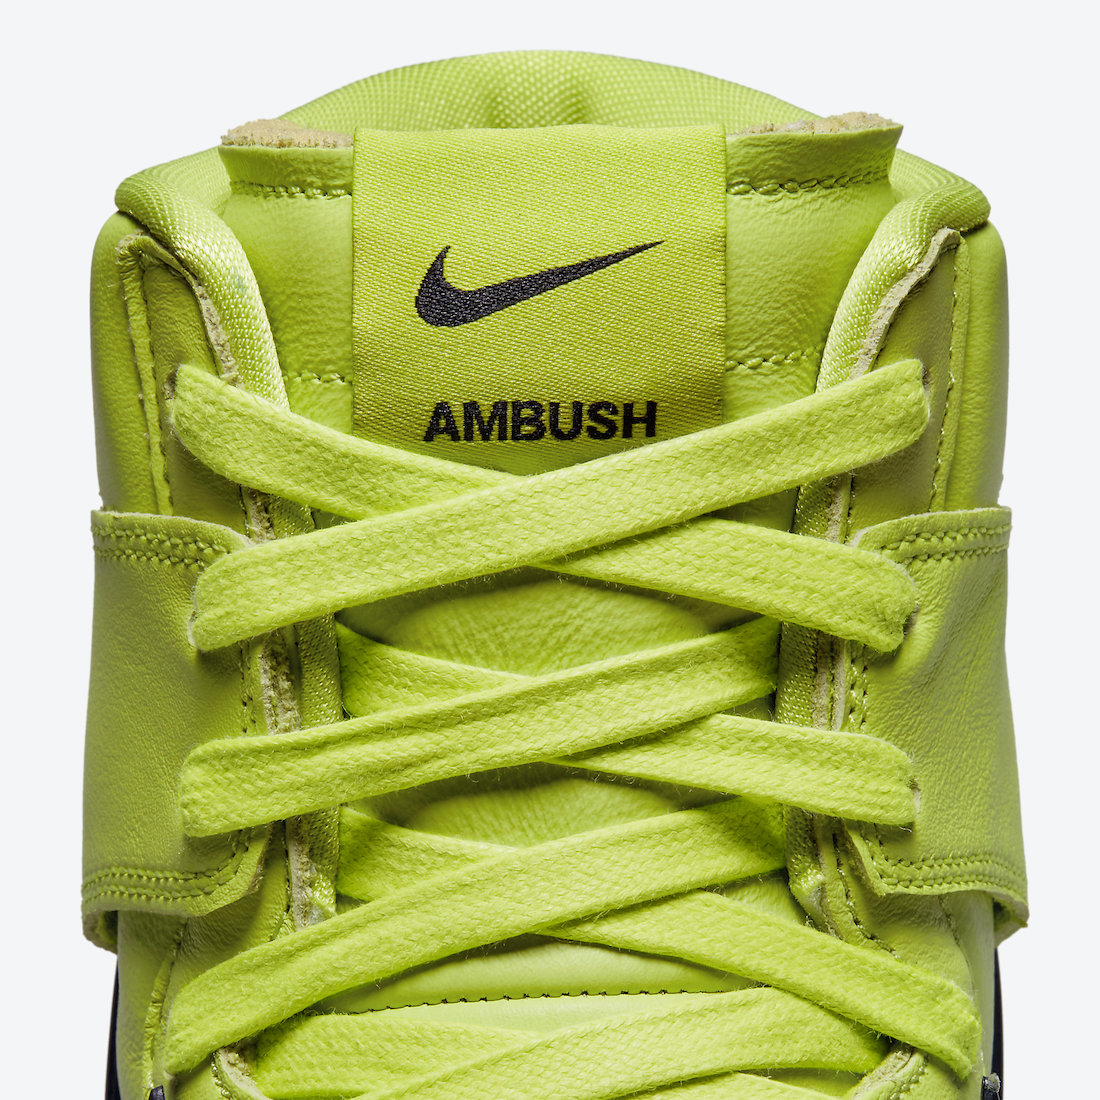 Ambush Nike Dunk High Flash Lime CU7544 300 Release Date 8